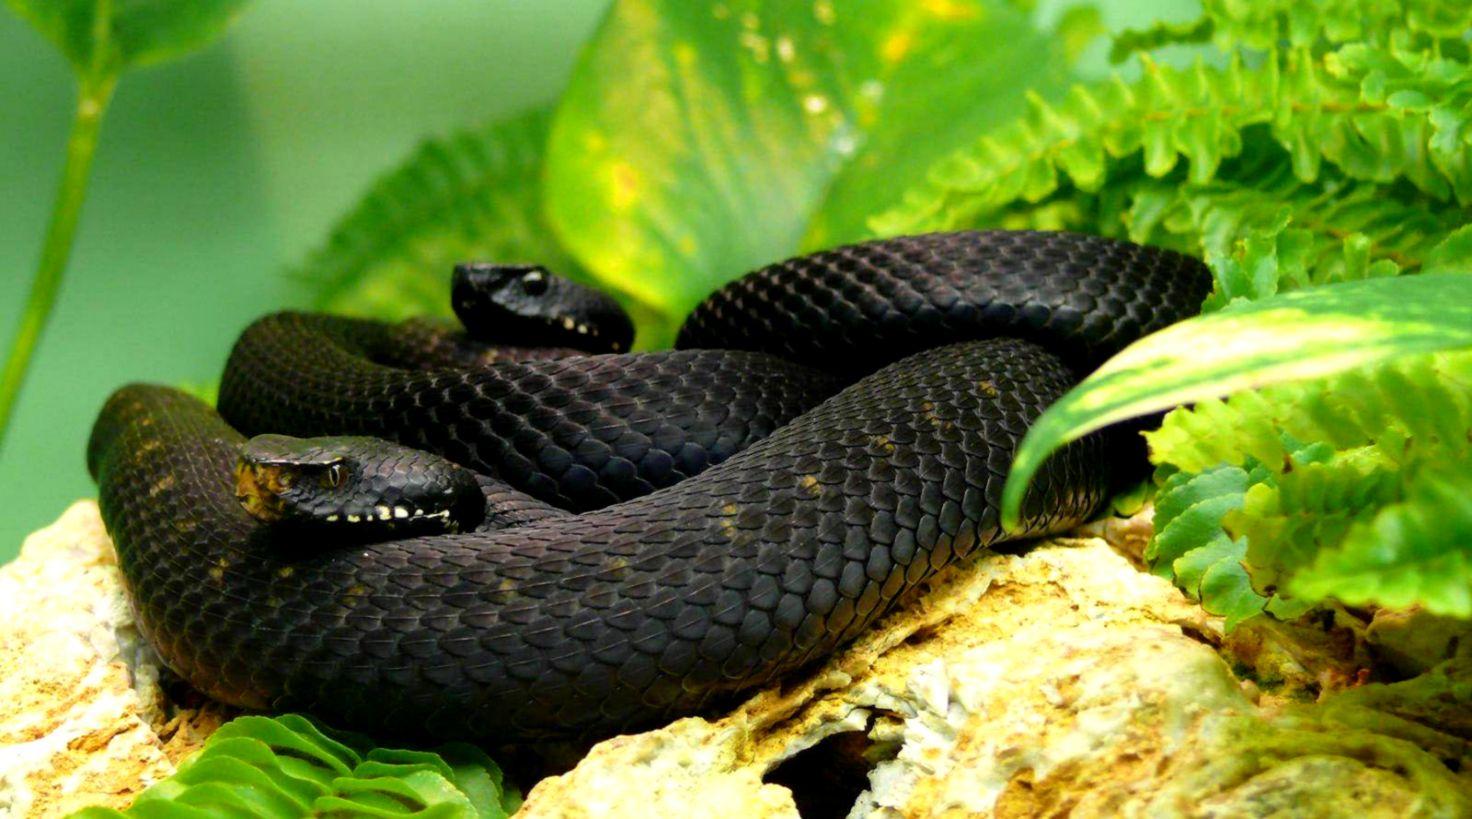 Black Cobra Snake Desktop Wallpaper In HD Free Download. Copy